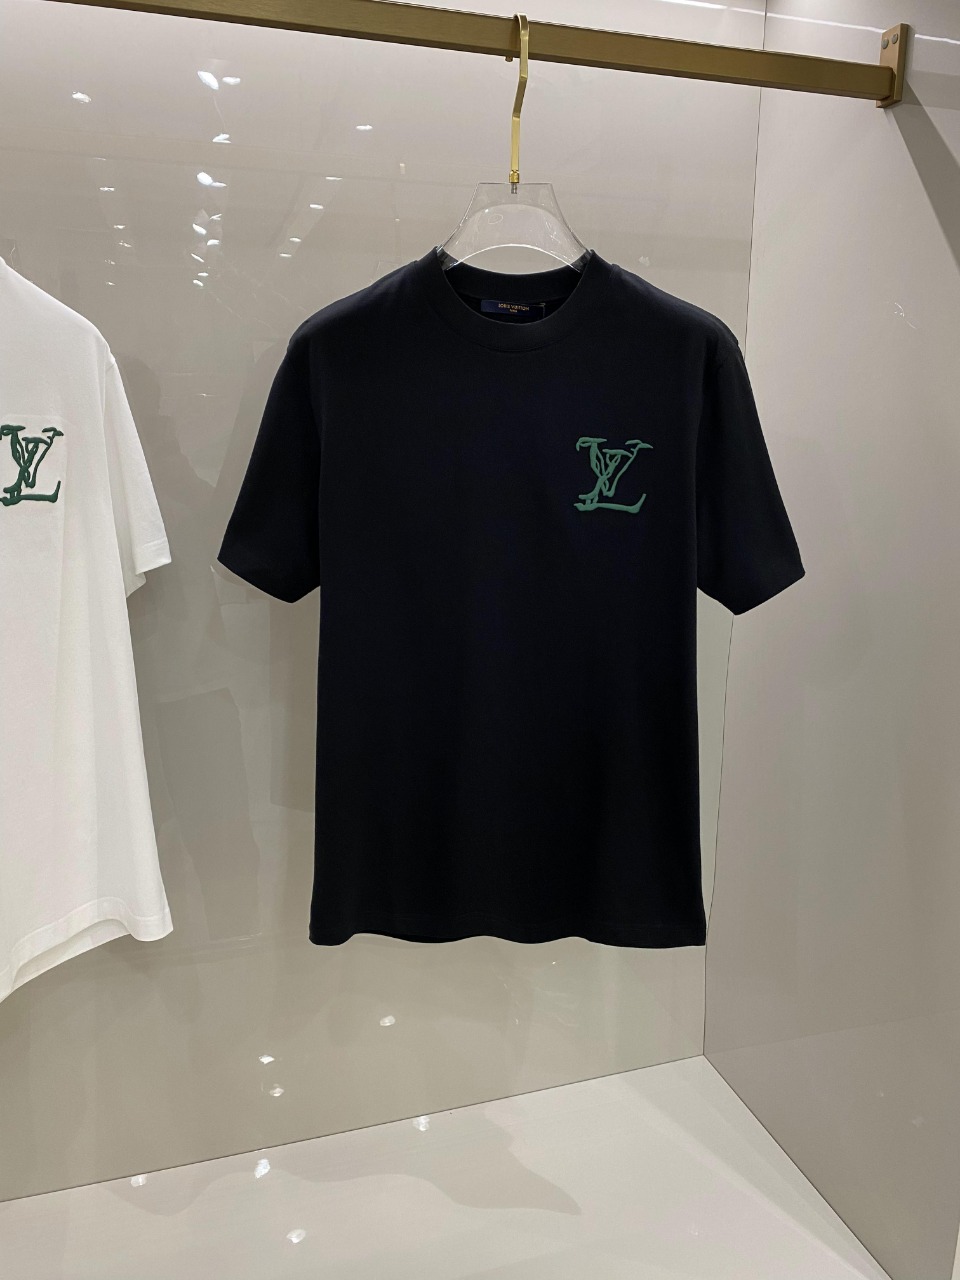 Louis Vuitton Clothing T-Shirt Black Khaki White Embroidery Unisex Cotton Spring/Summer Collection Short Sleeve